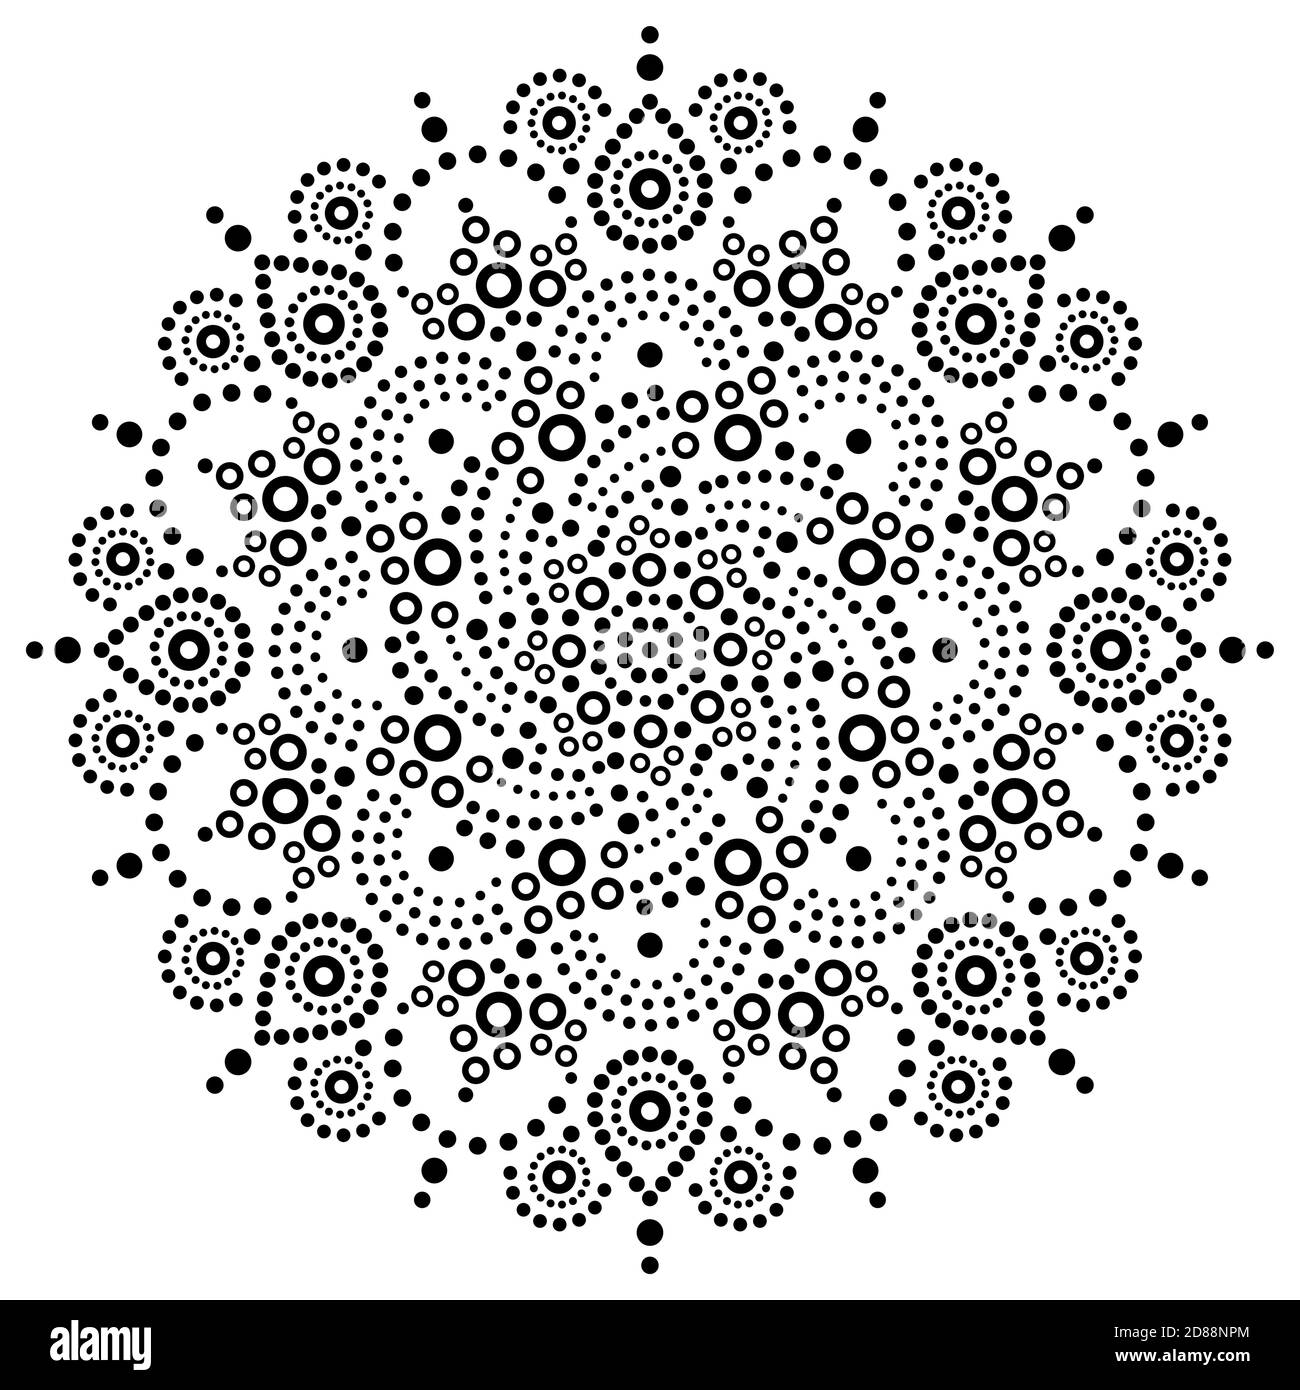 Aborigines Bohemian Dot Painting Mandala Vektor-Muster, Australian Dot Art Ornament in schwarz auf weiß Stock Vektor